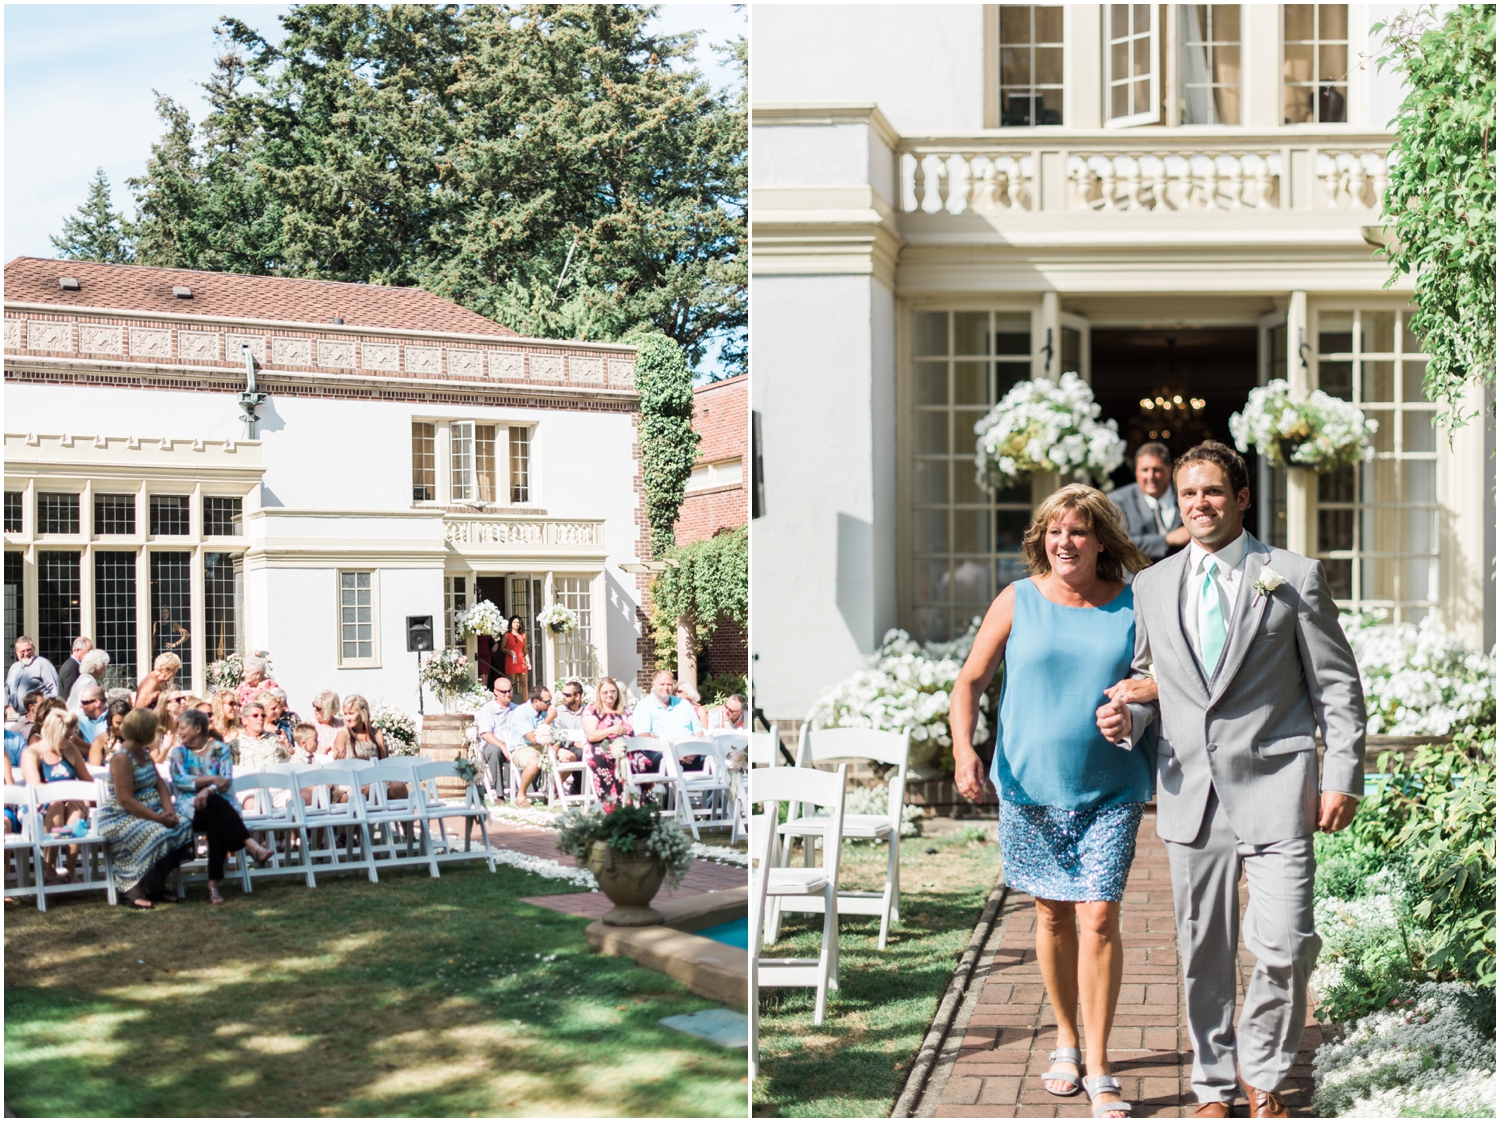 Bailey and Danes Lairmont Manor Wedding. Bellingham Weddin Photographer